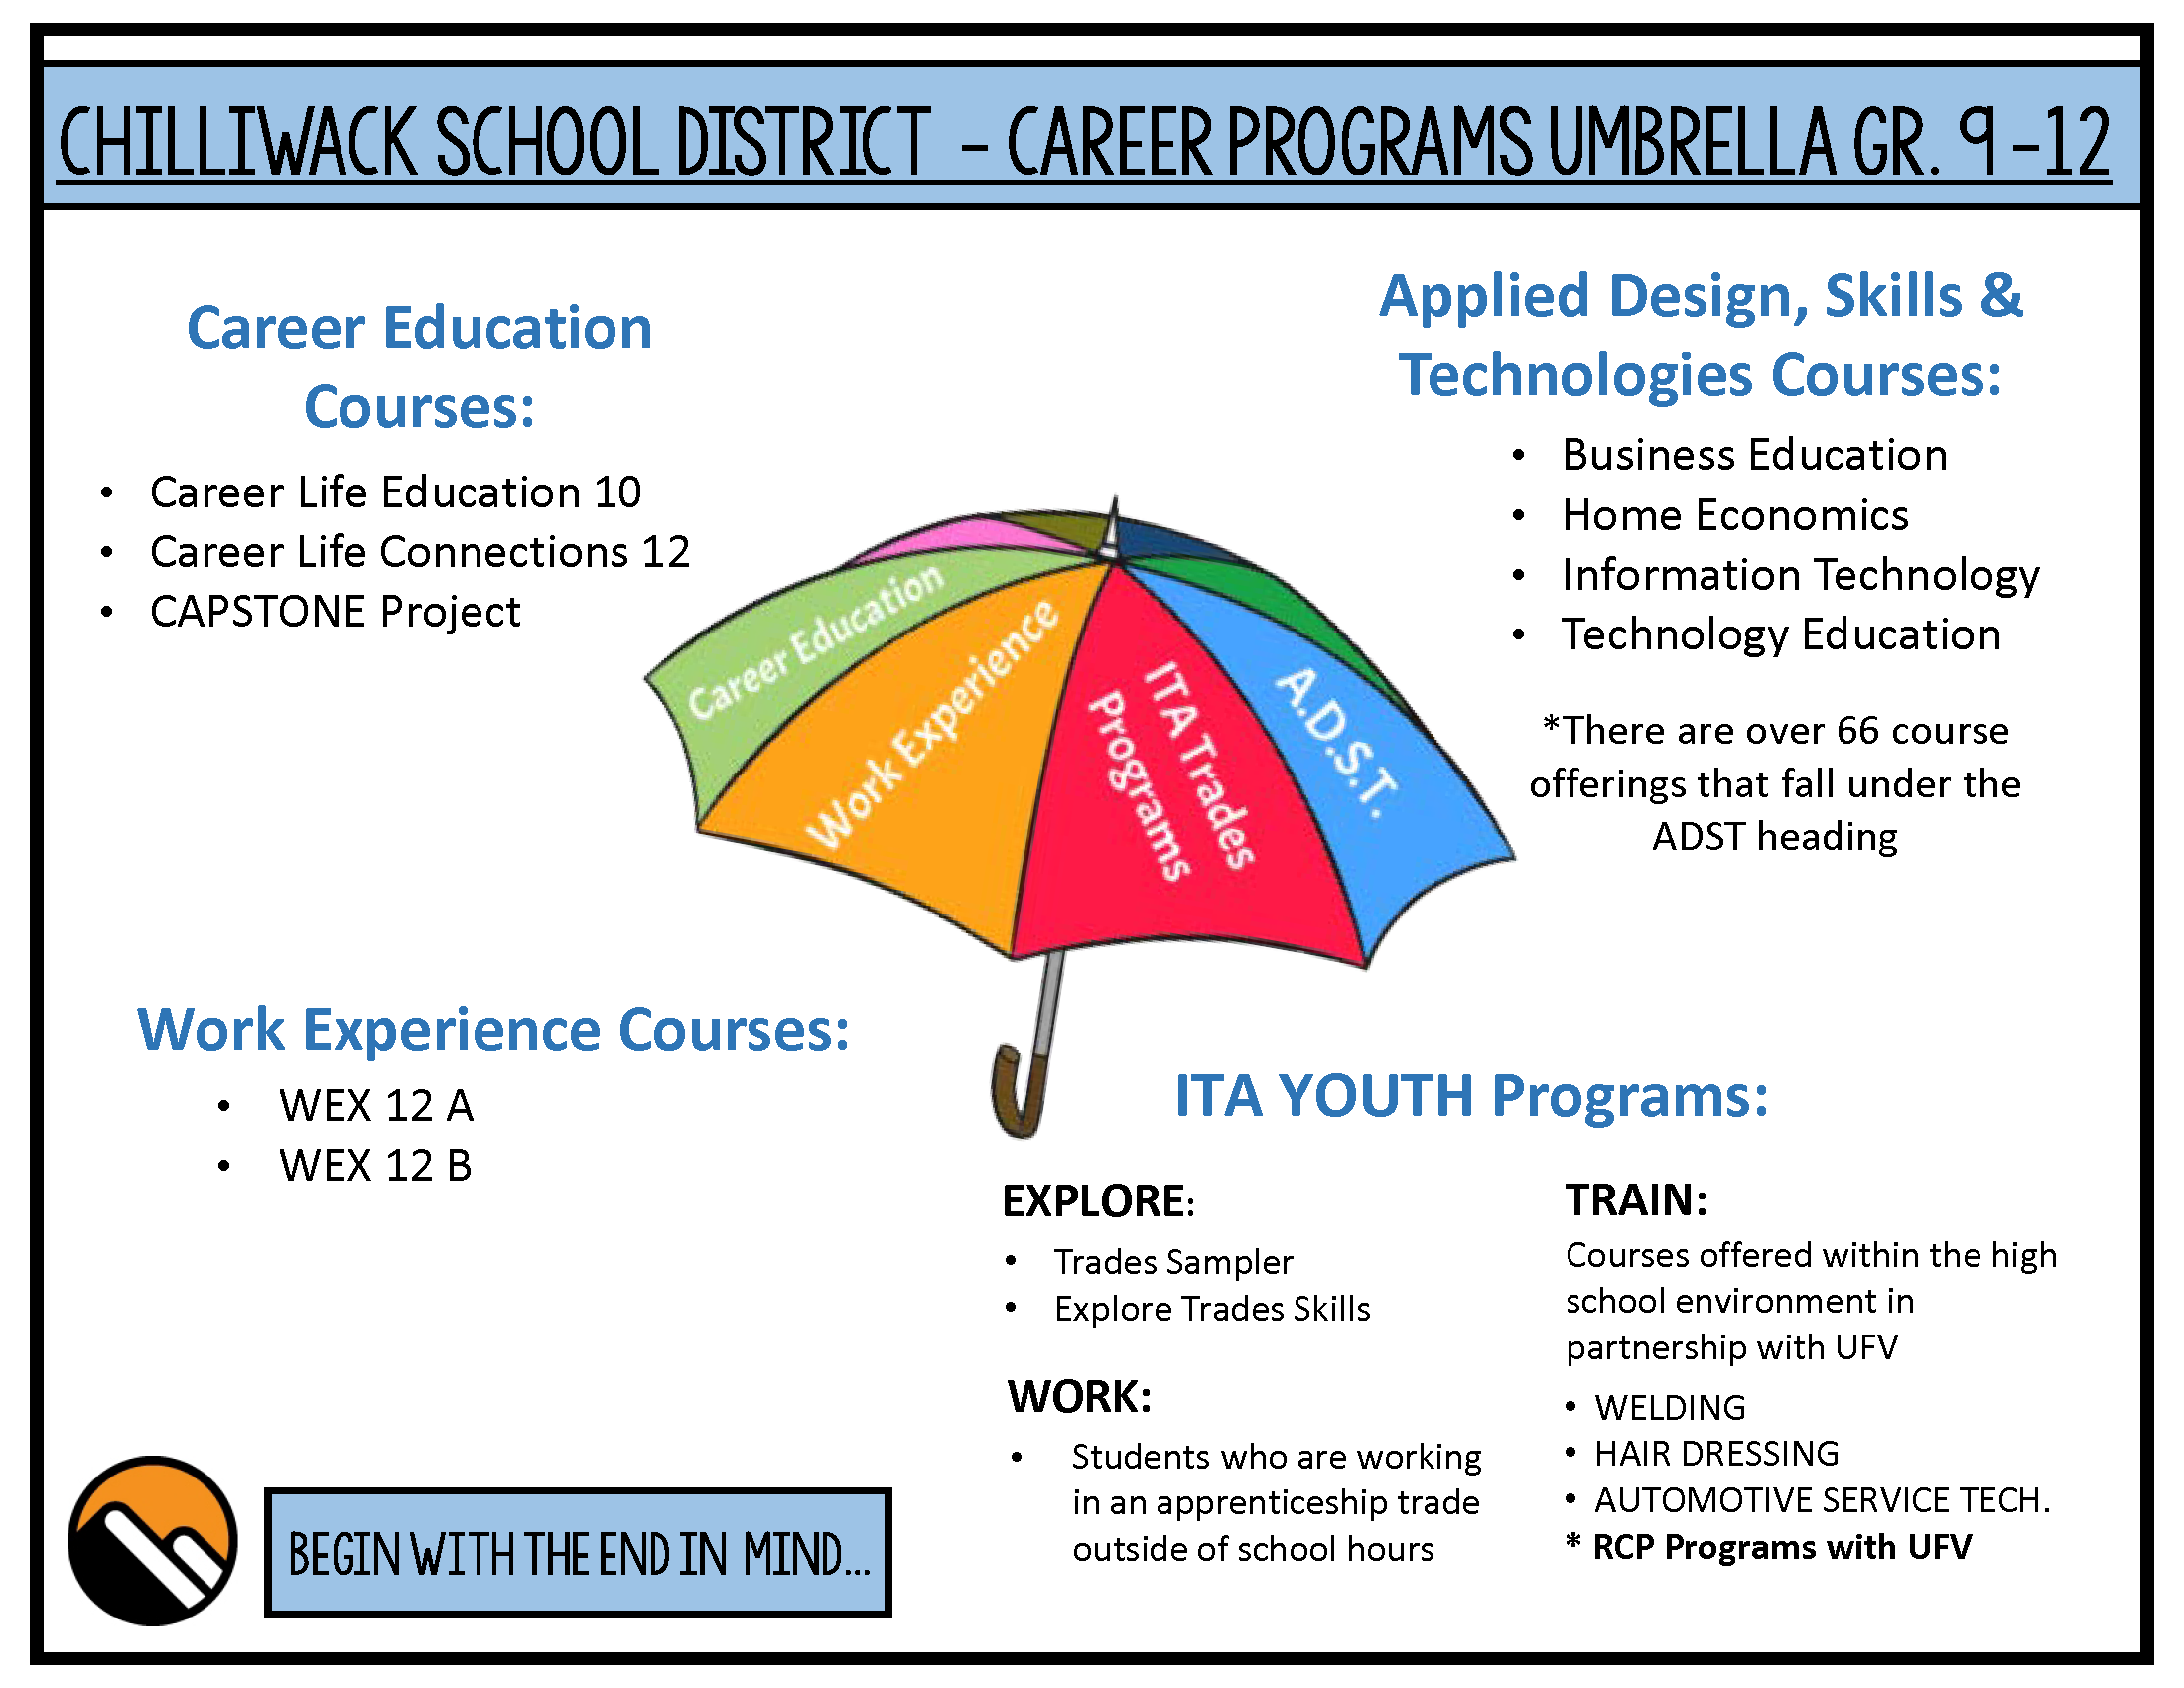 SD33 Career Education Umbrella